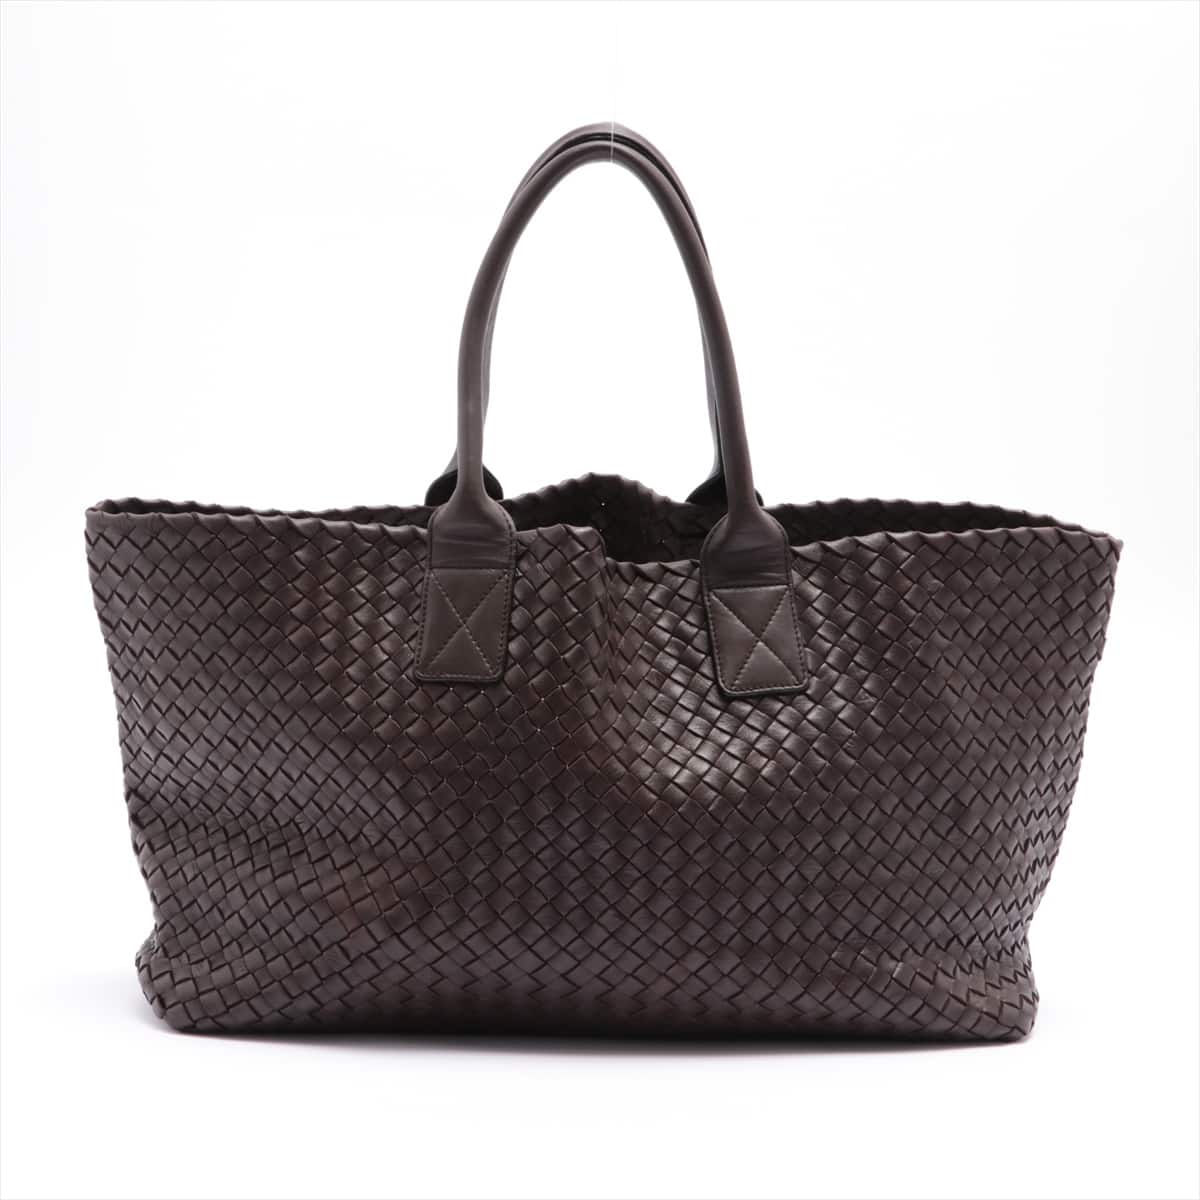 Bottega Veneta Intrecciato Cabas MM Leather Tote bag Brown with pouch